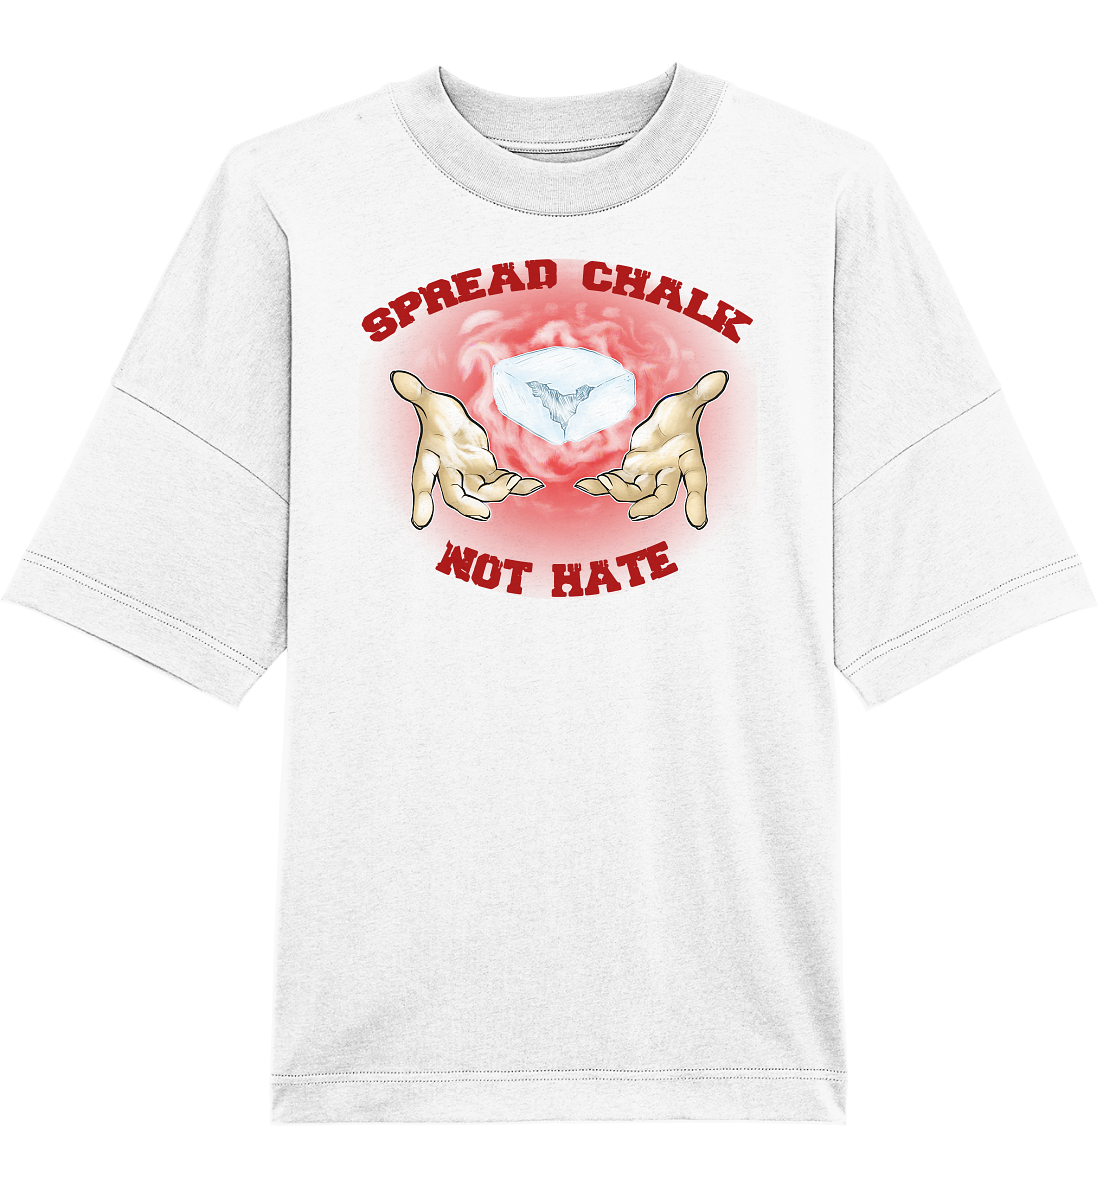 Spread Chalk Not Hate - Organic Oversize Shirt